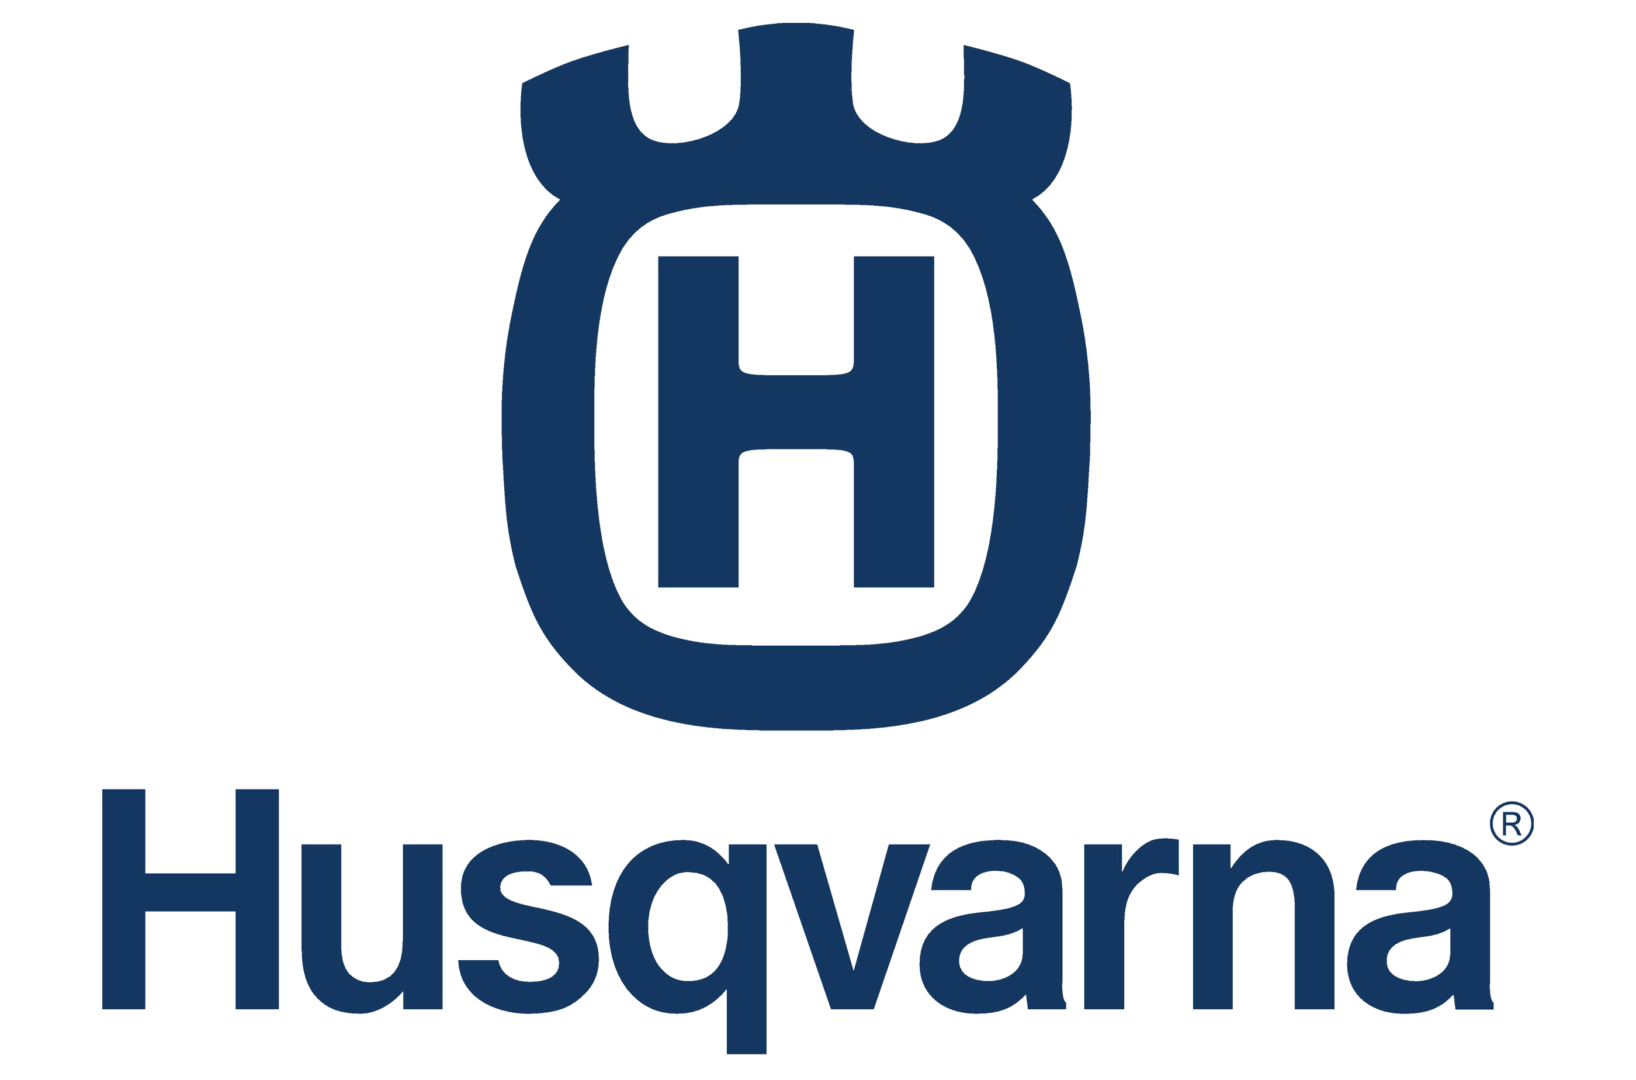 Husqvarna motorcycle logo history and Meaning, bike emblem